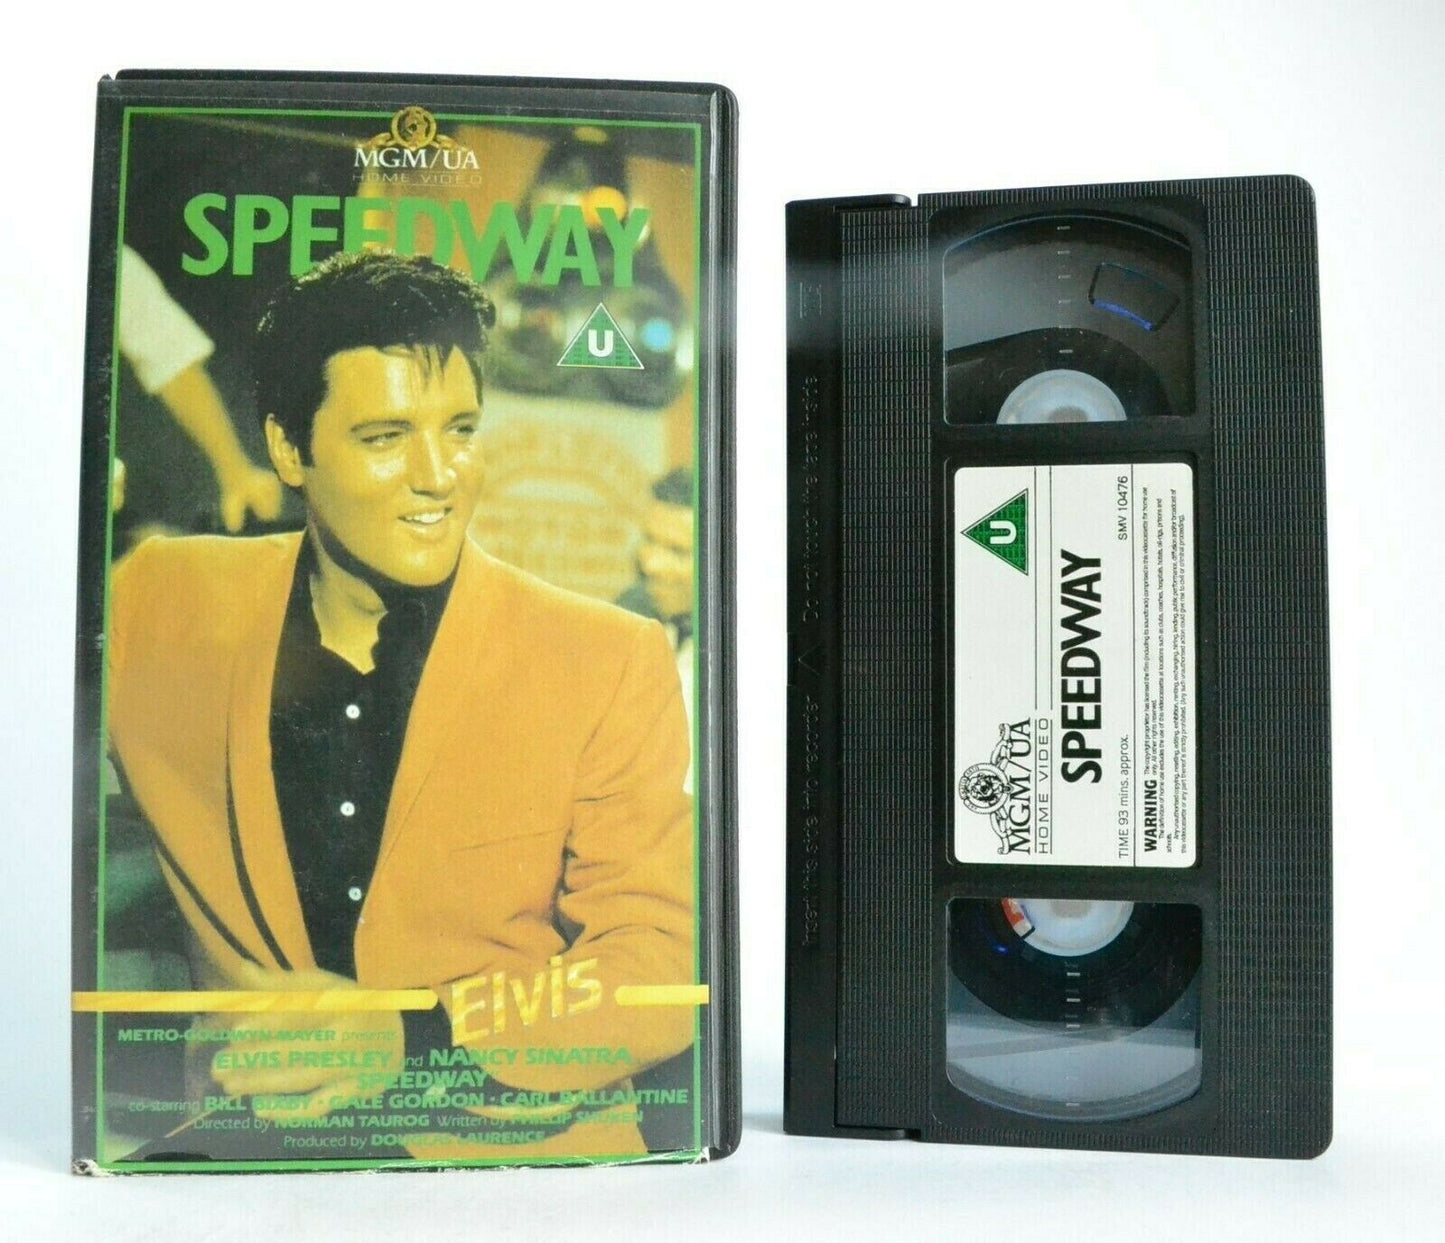 Speedway (MGM/UA): Elvis Presley/Nancy Sinatra - Classic Musical (1968) - VHS-